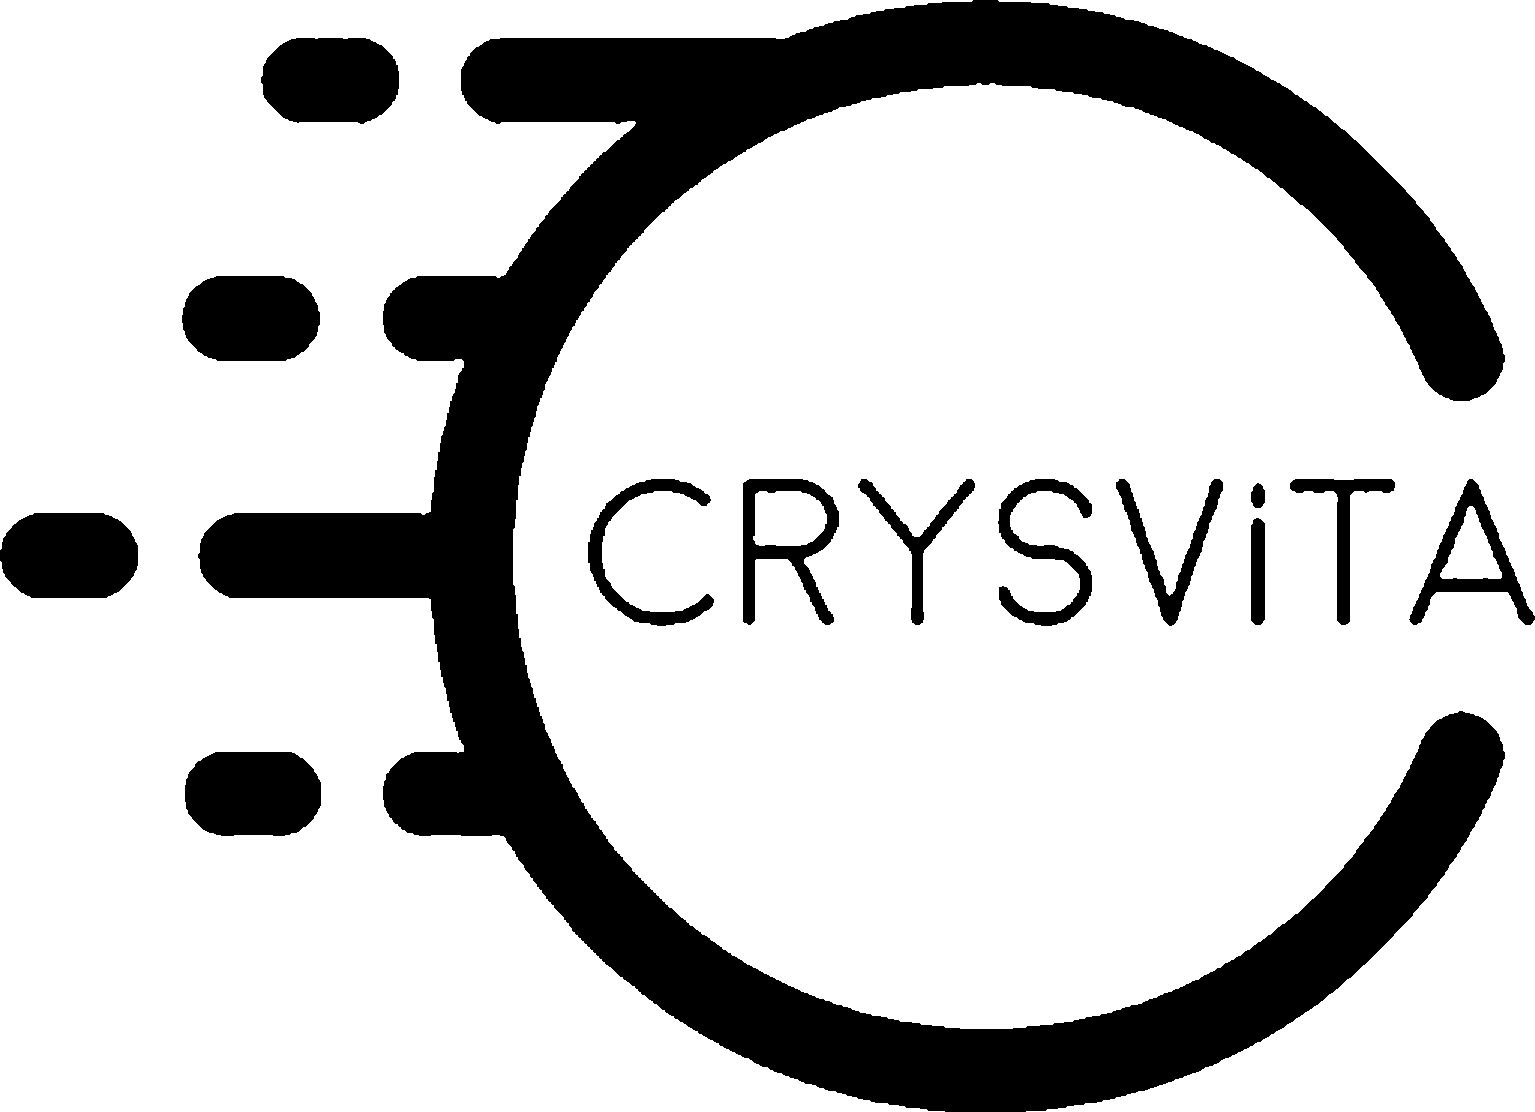 Trademark Logo CRYSVITA